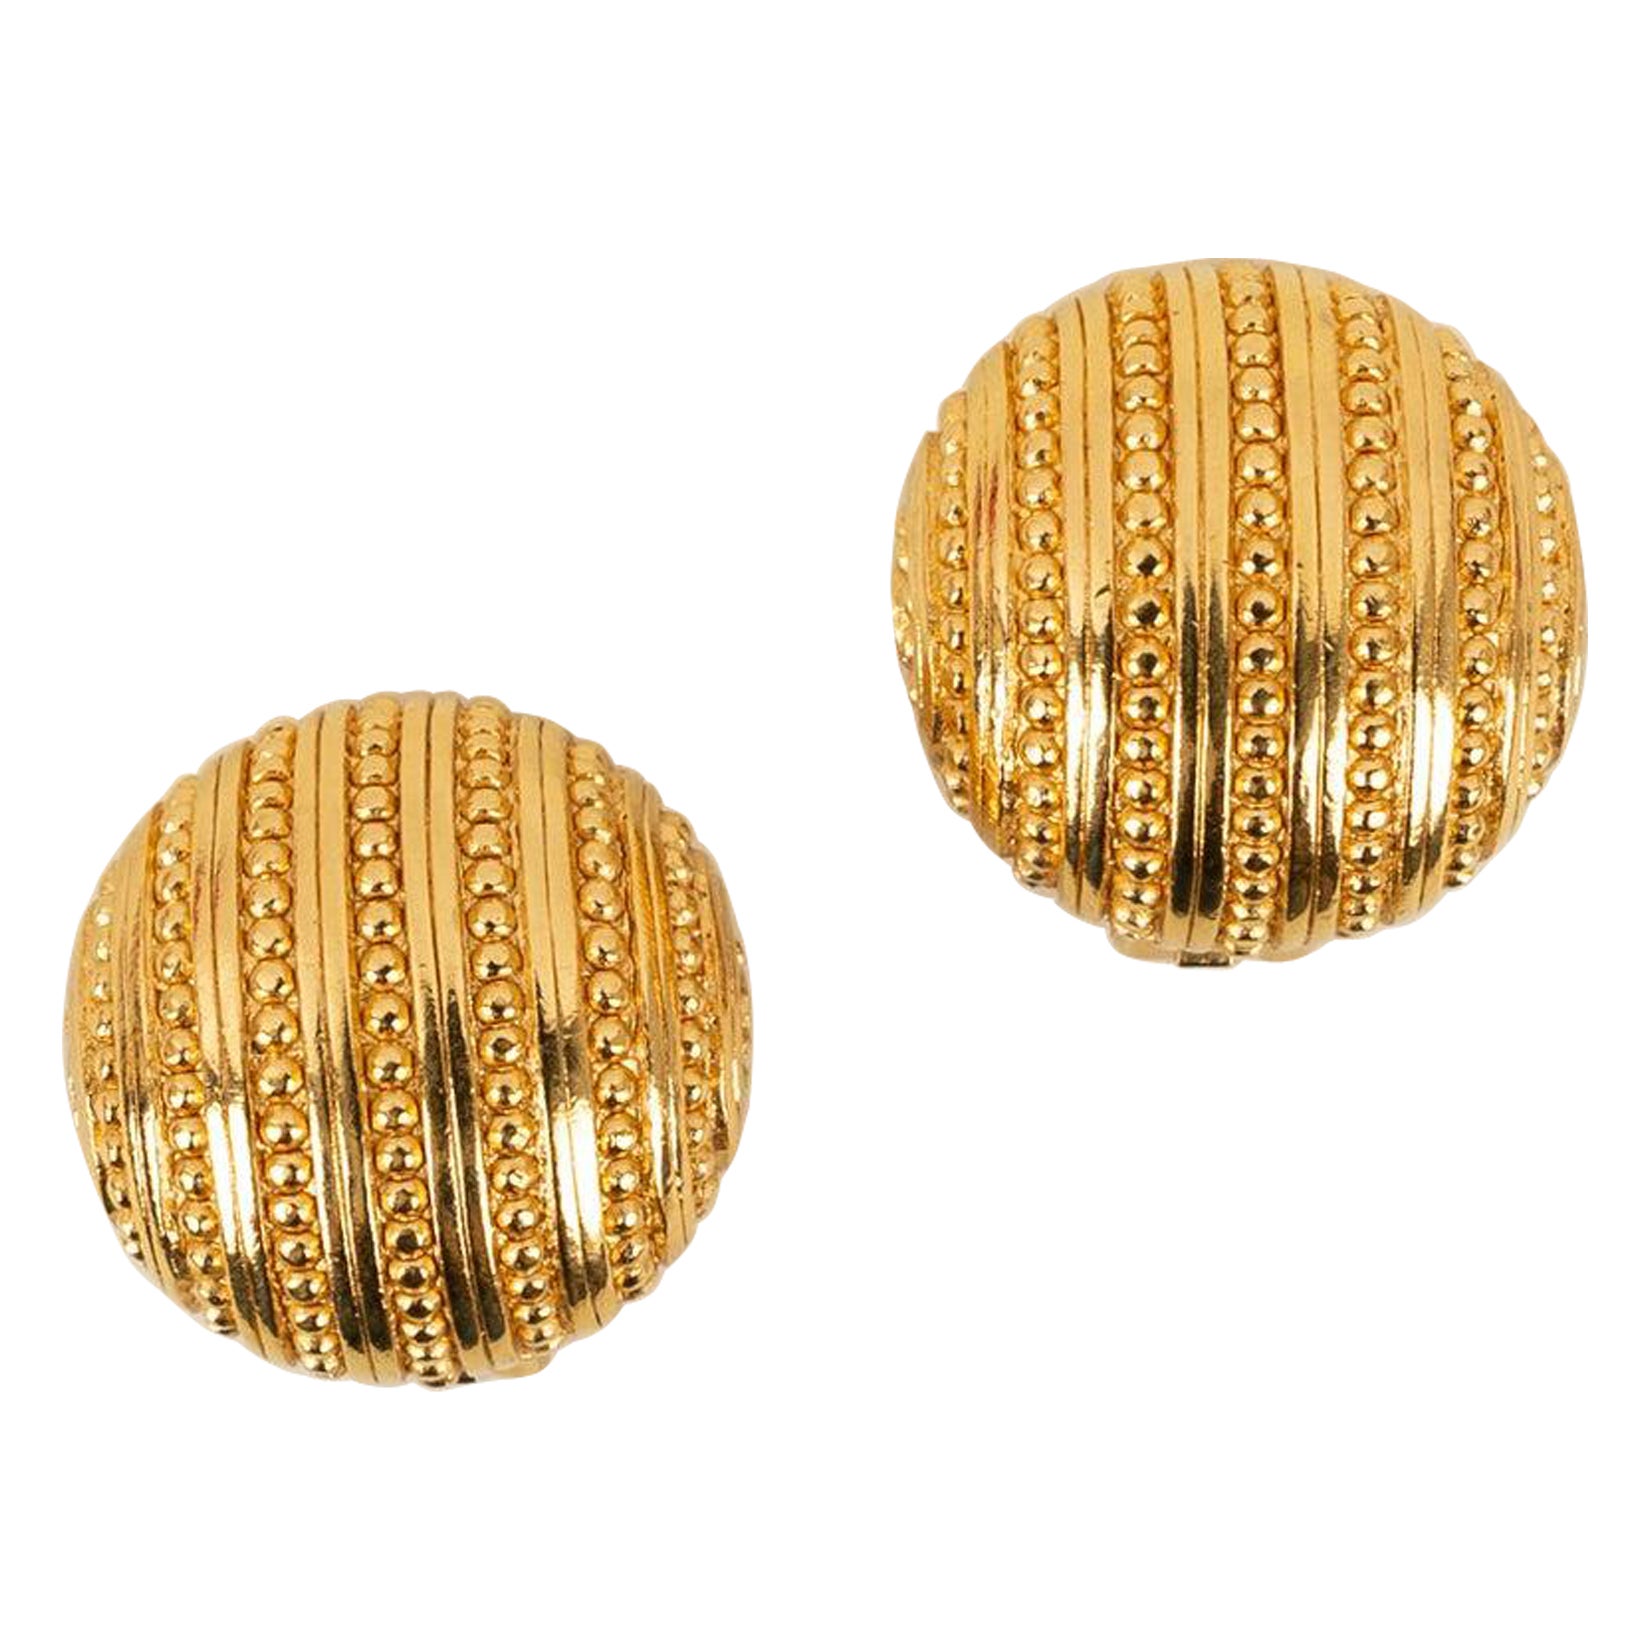 Christian Dior Earrings in Golden Metal